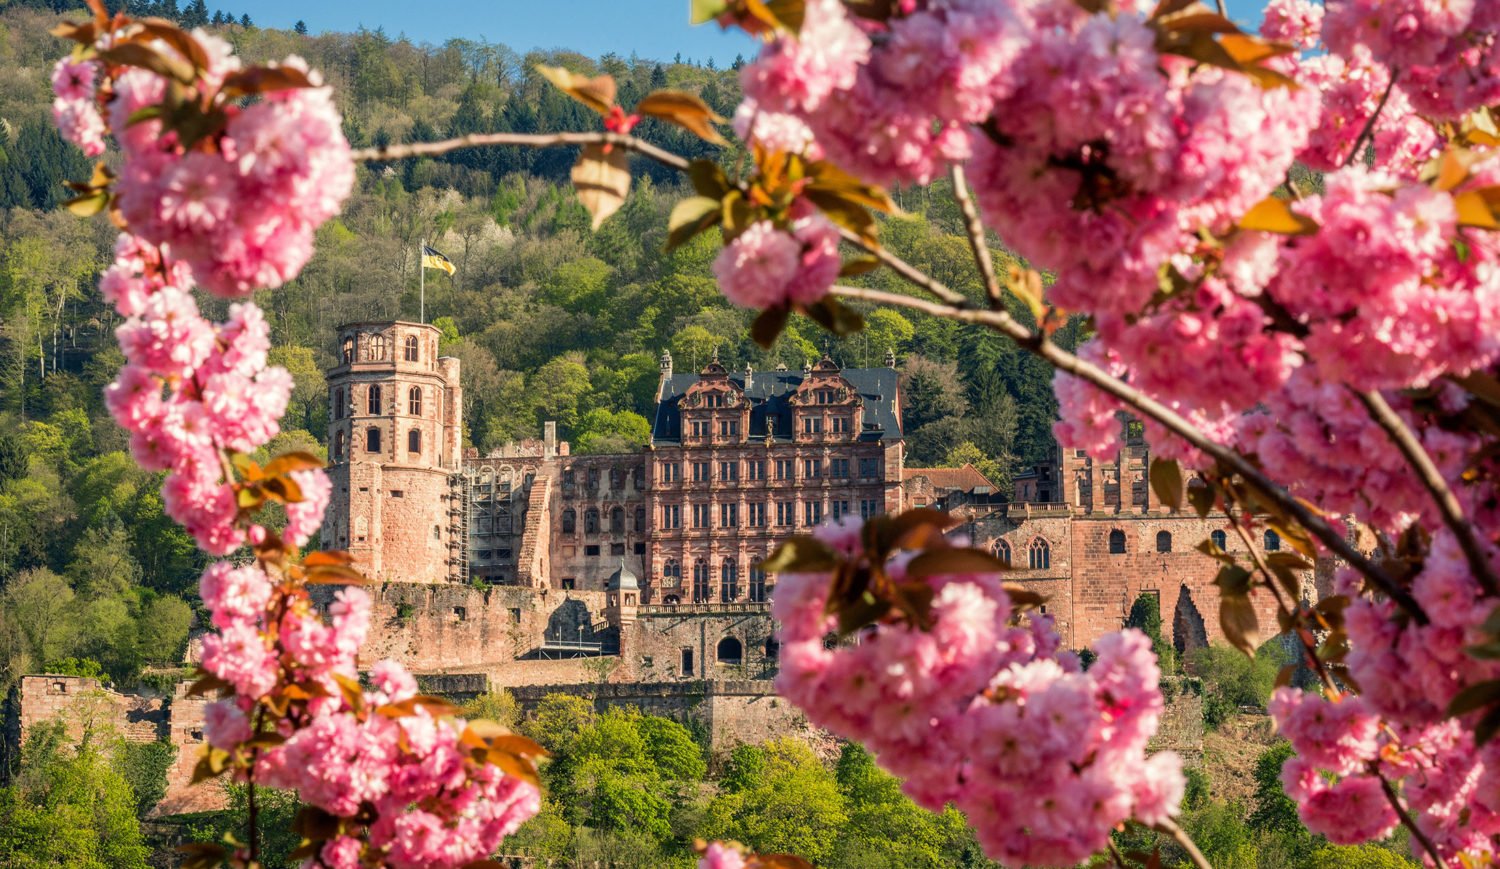 Transfigured view of Germany's most romantic ruin - Heidelberg Castle